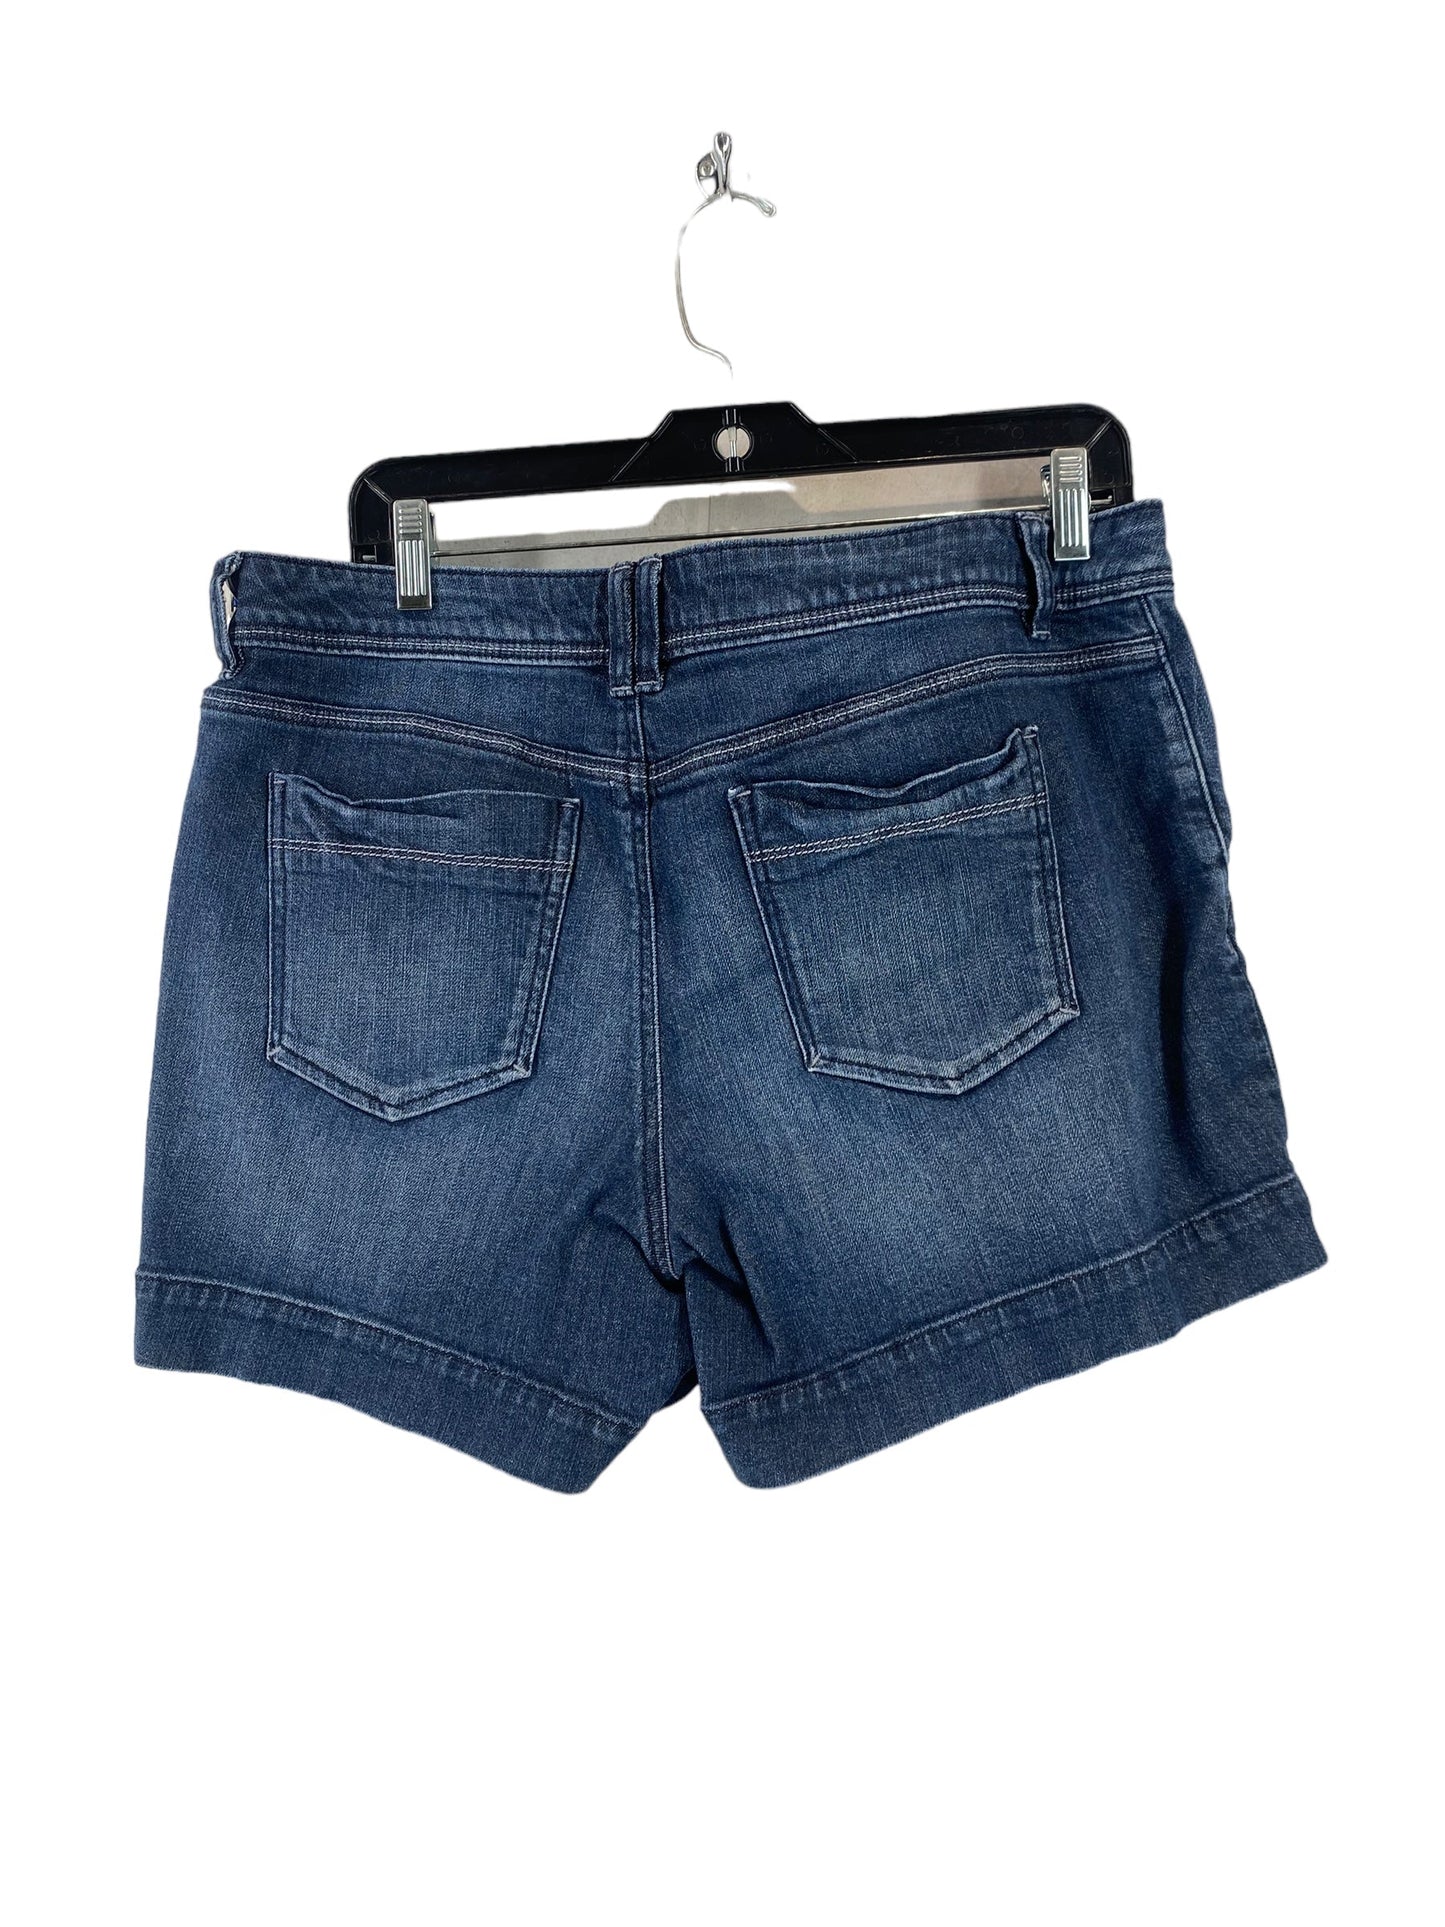 Blue Denim Shorts Apt 9, Size 12